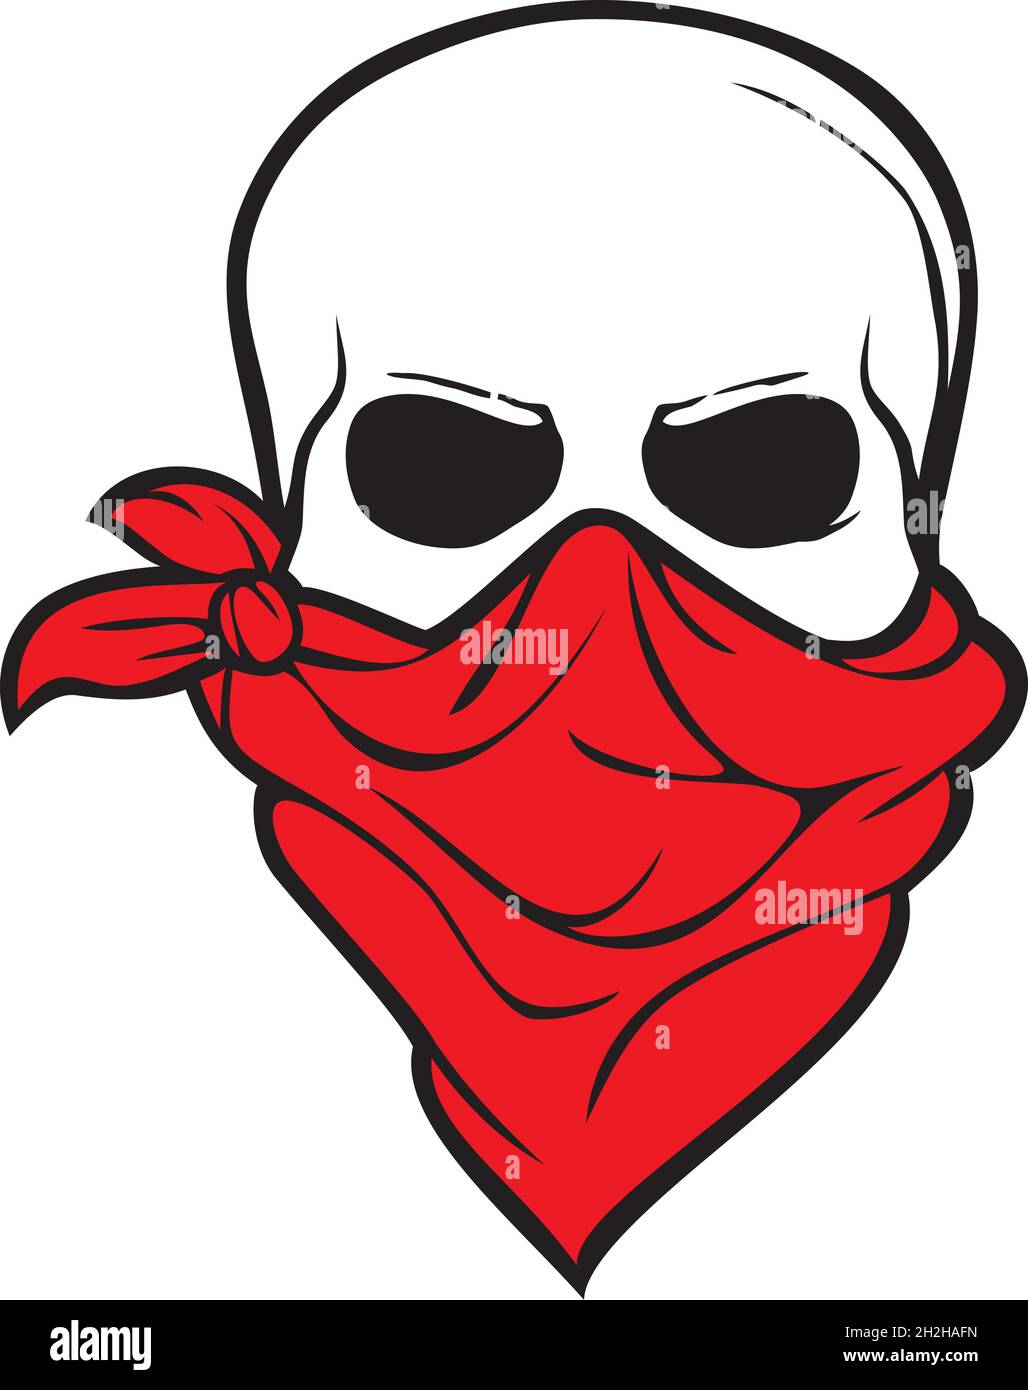 Skull with bandana vector illustration Stock Vector